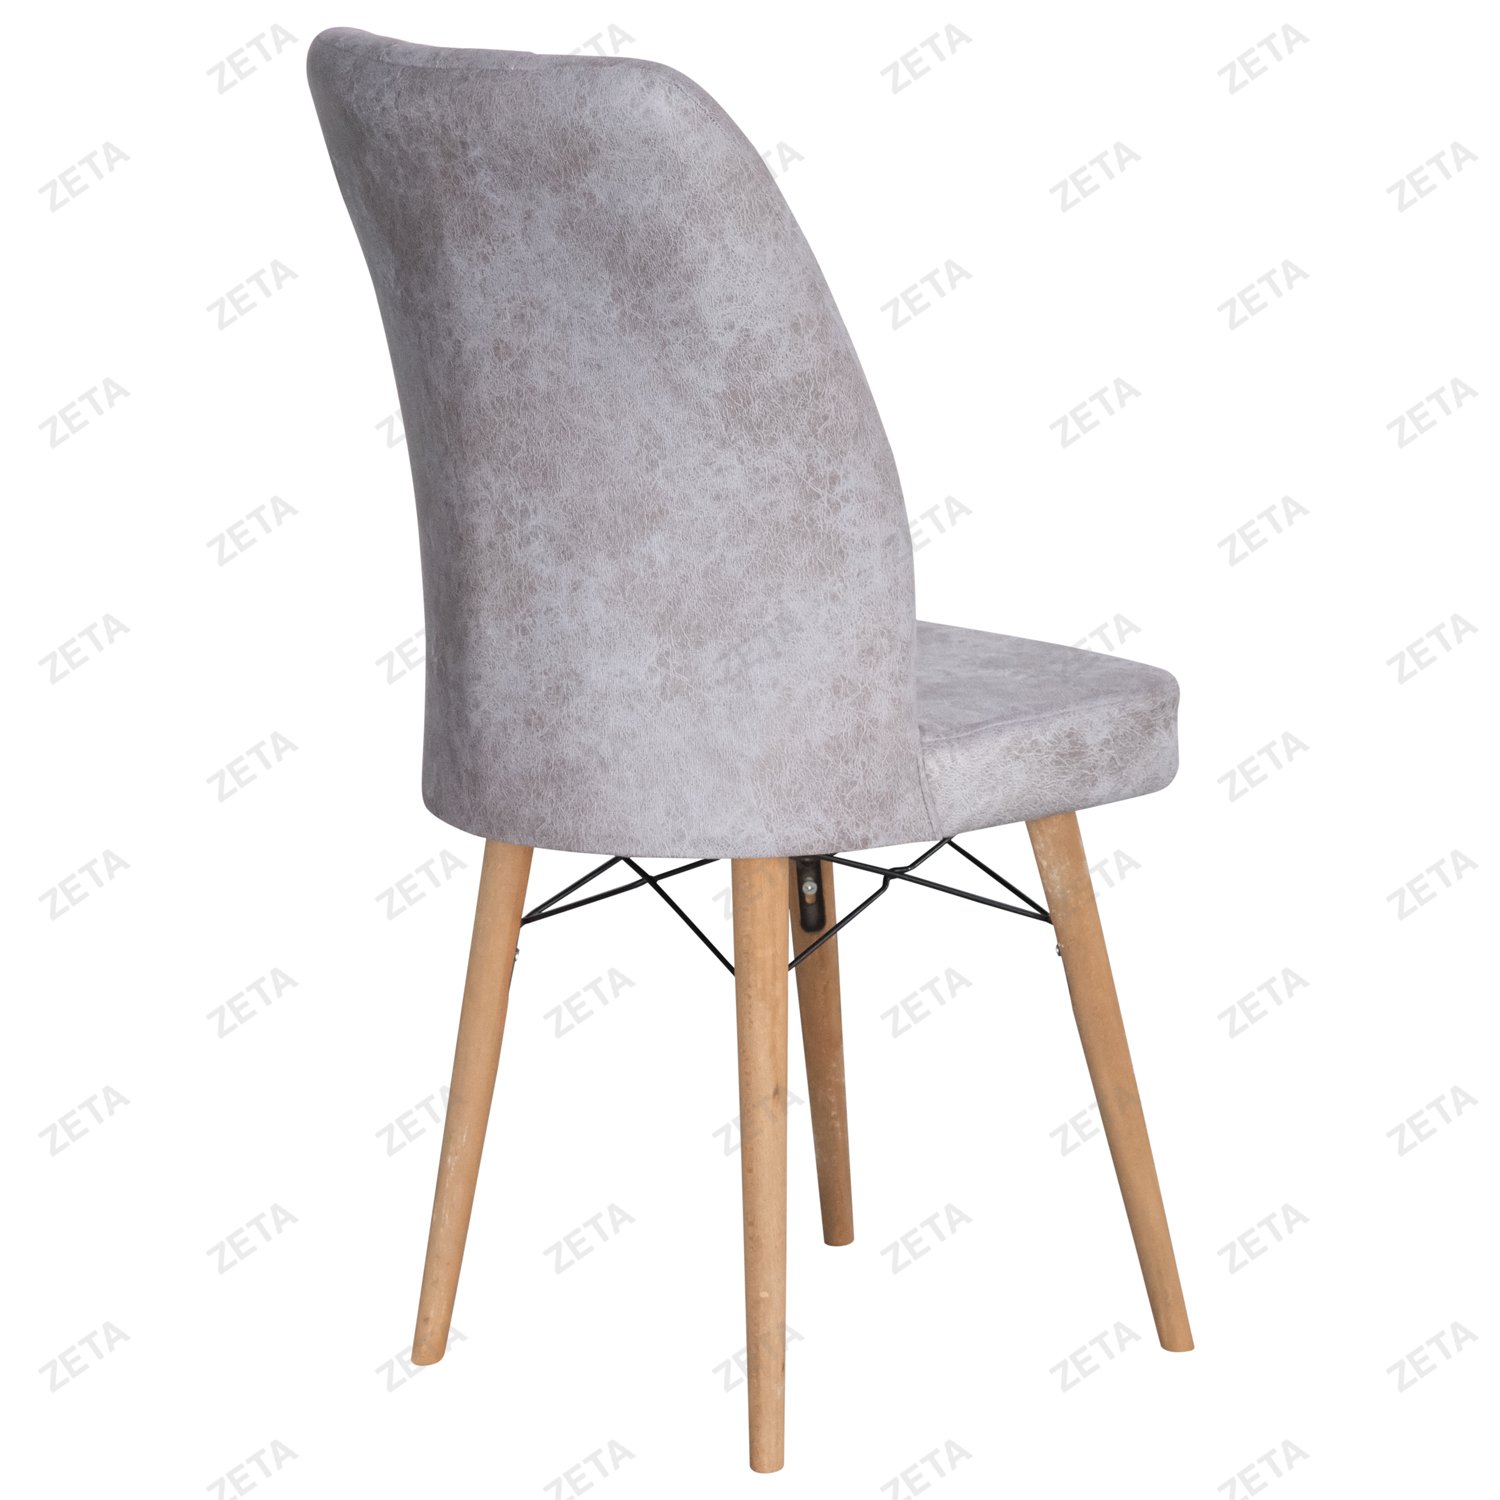 Стул Deko chair (серый) (Ѕ-Турция) - изображение 3